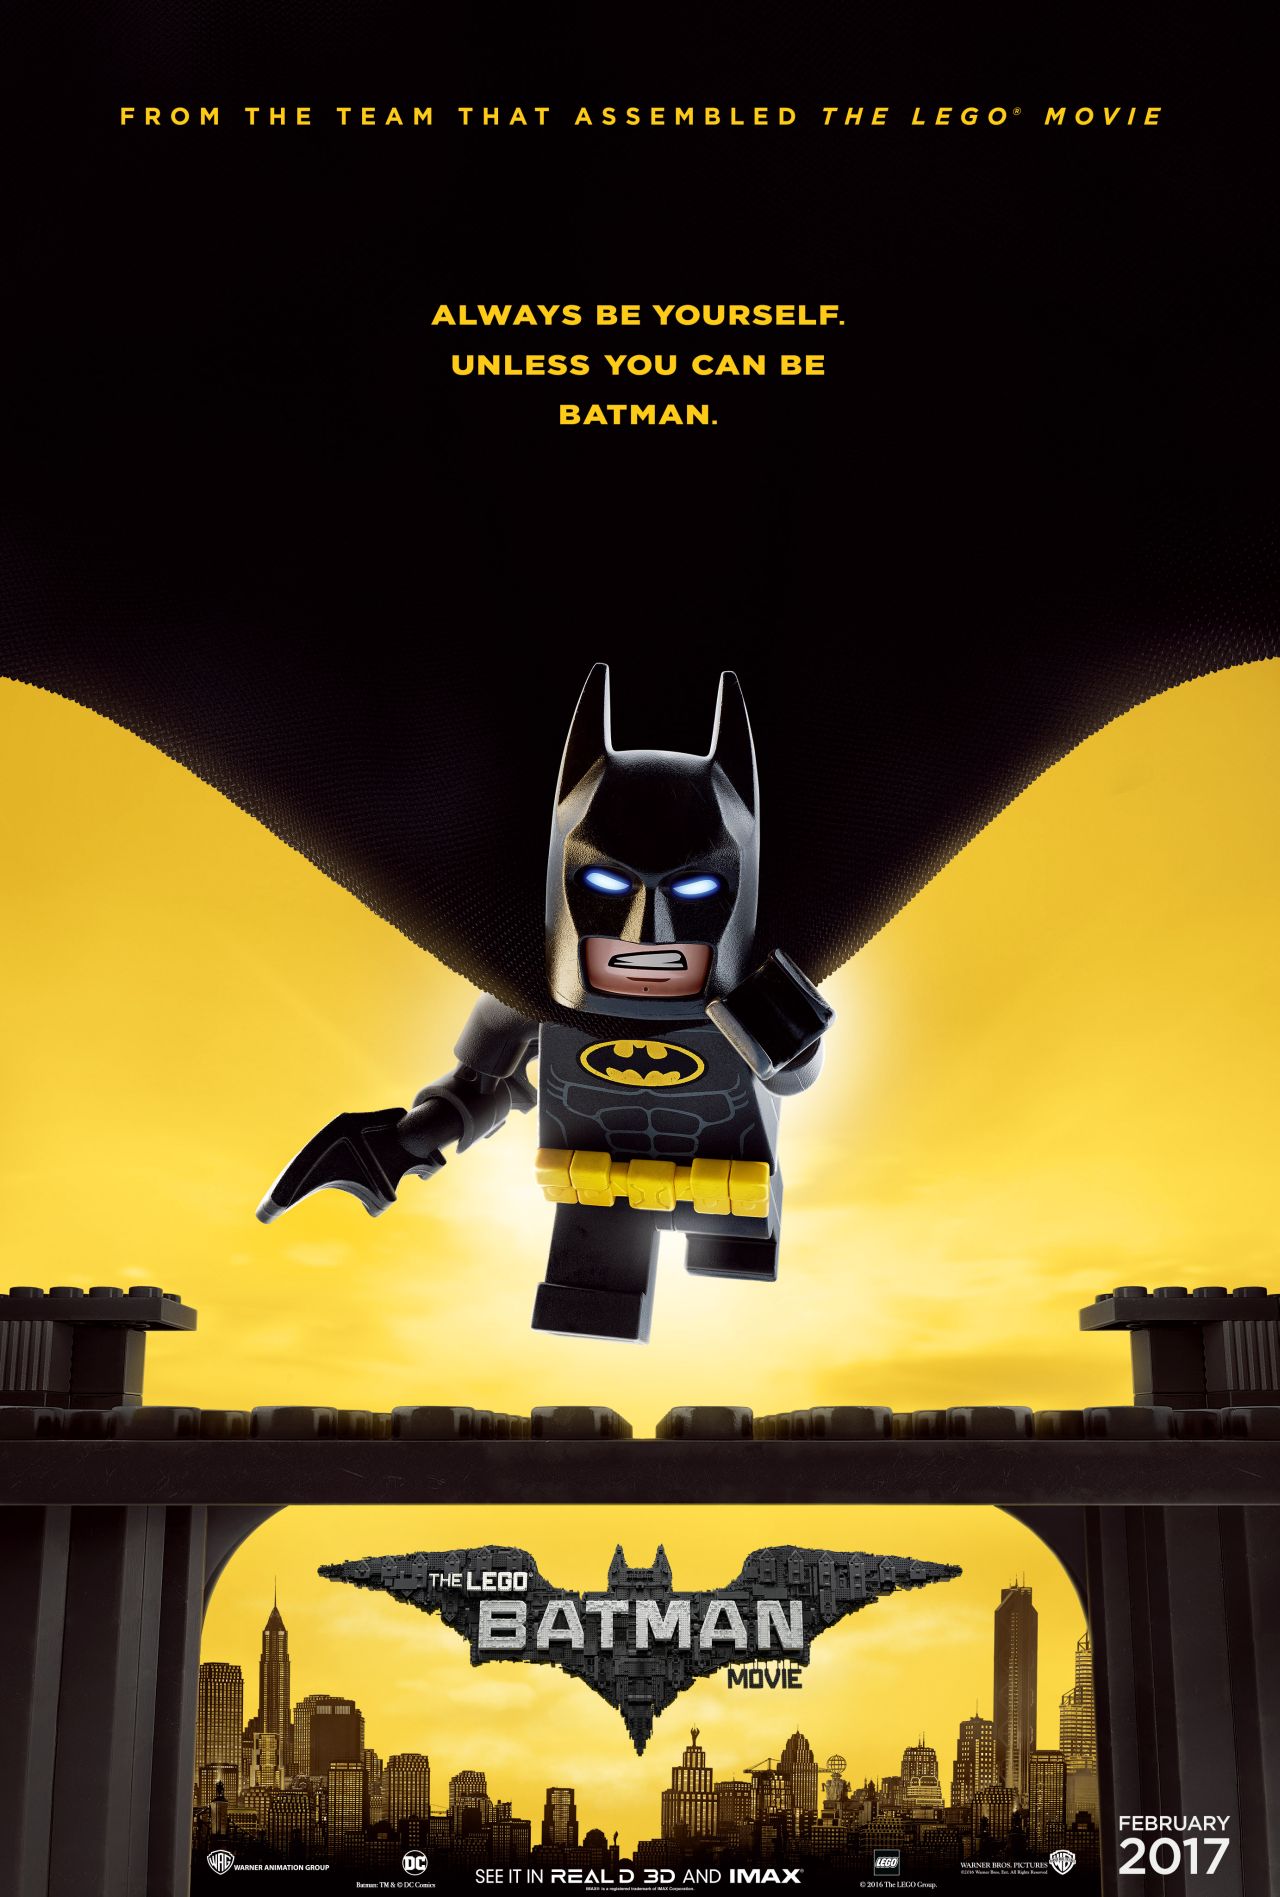 Will Arnett, star of new The Lego Batman Movie, gets interviewed